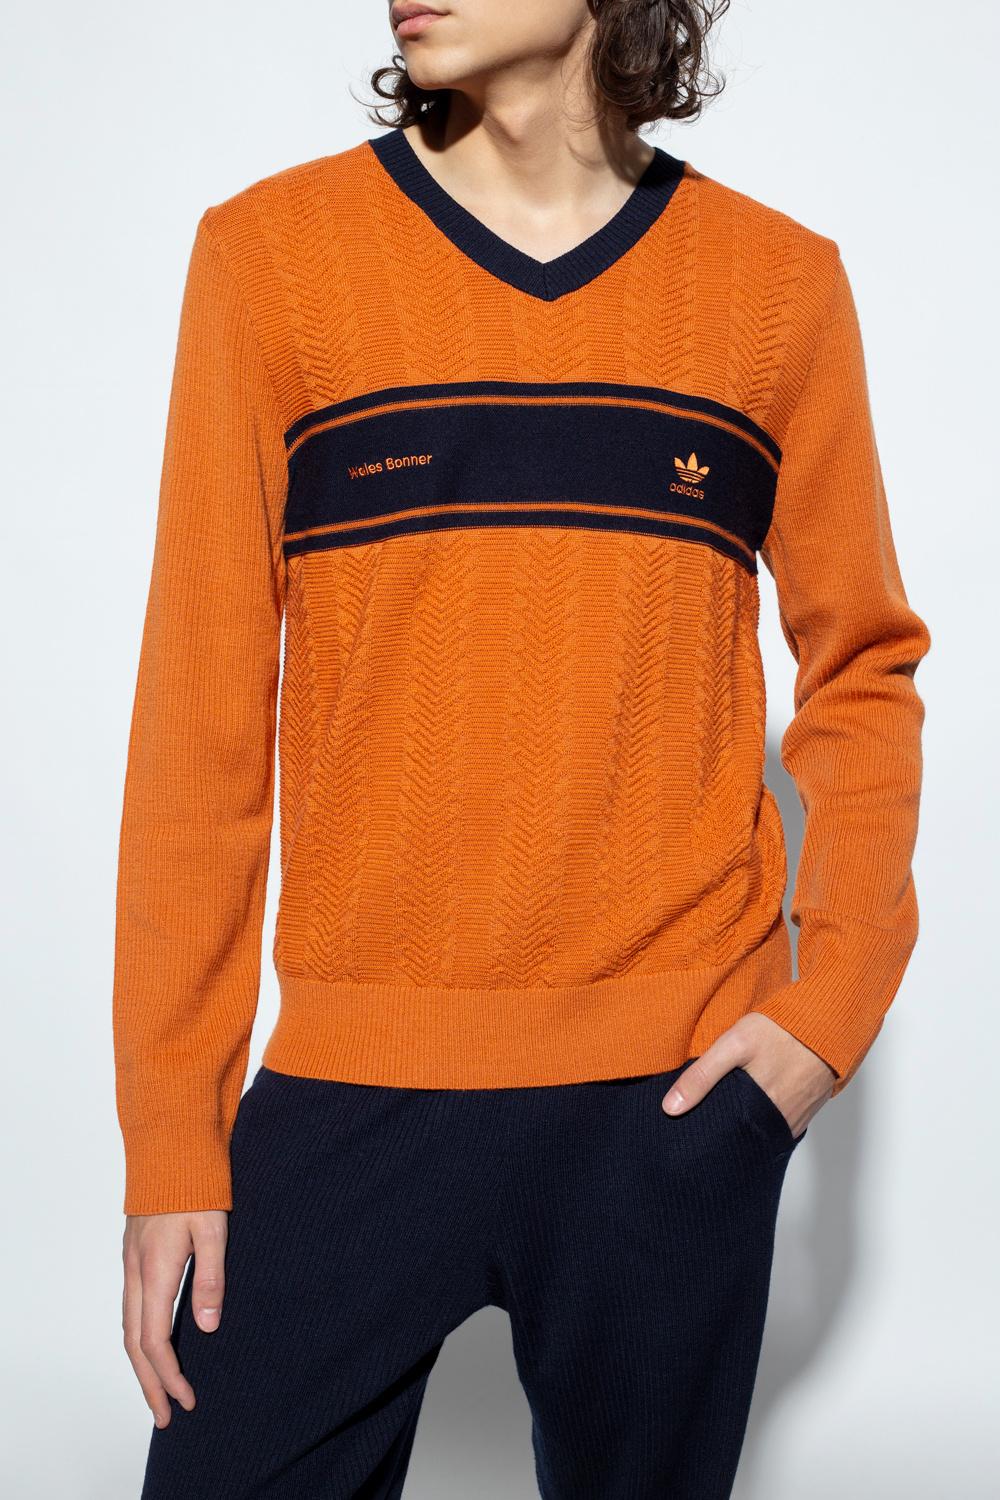 adidas Originals Wool X Wales Bonner in Orange for Men | Lyst